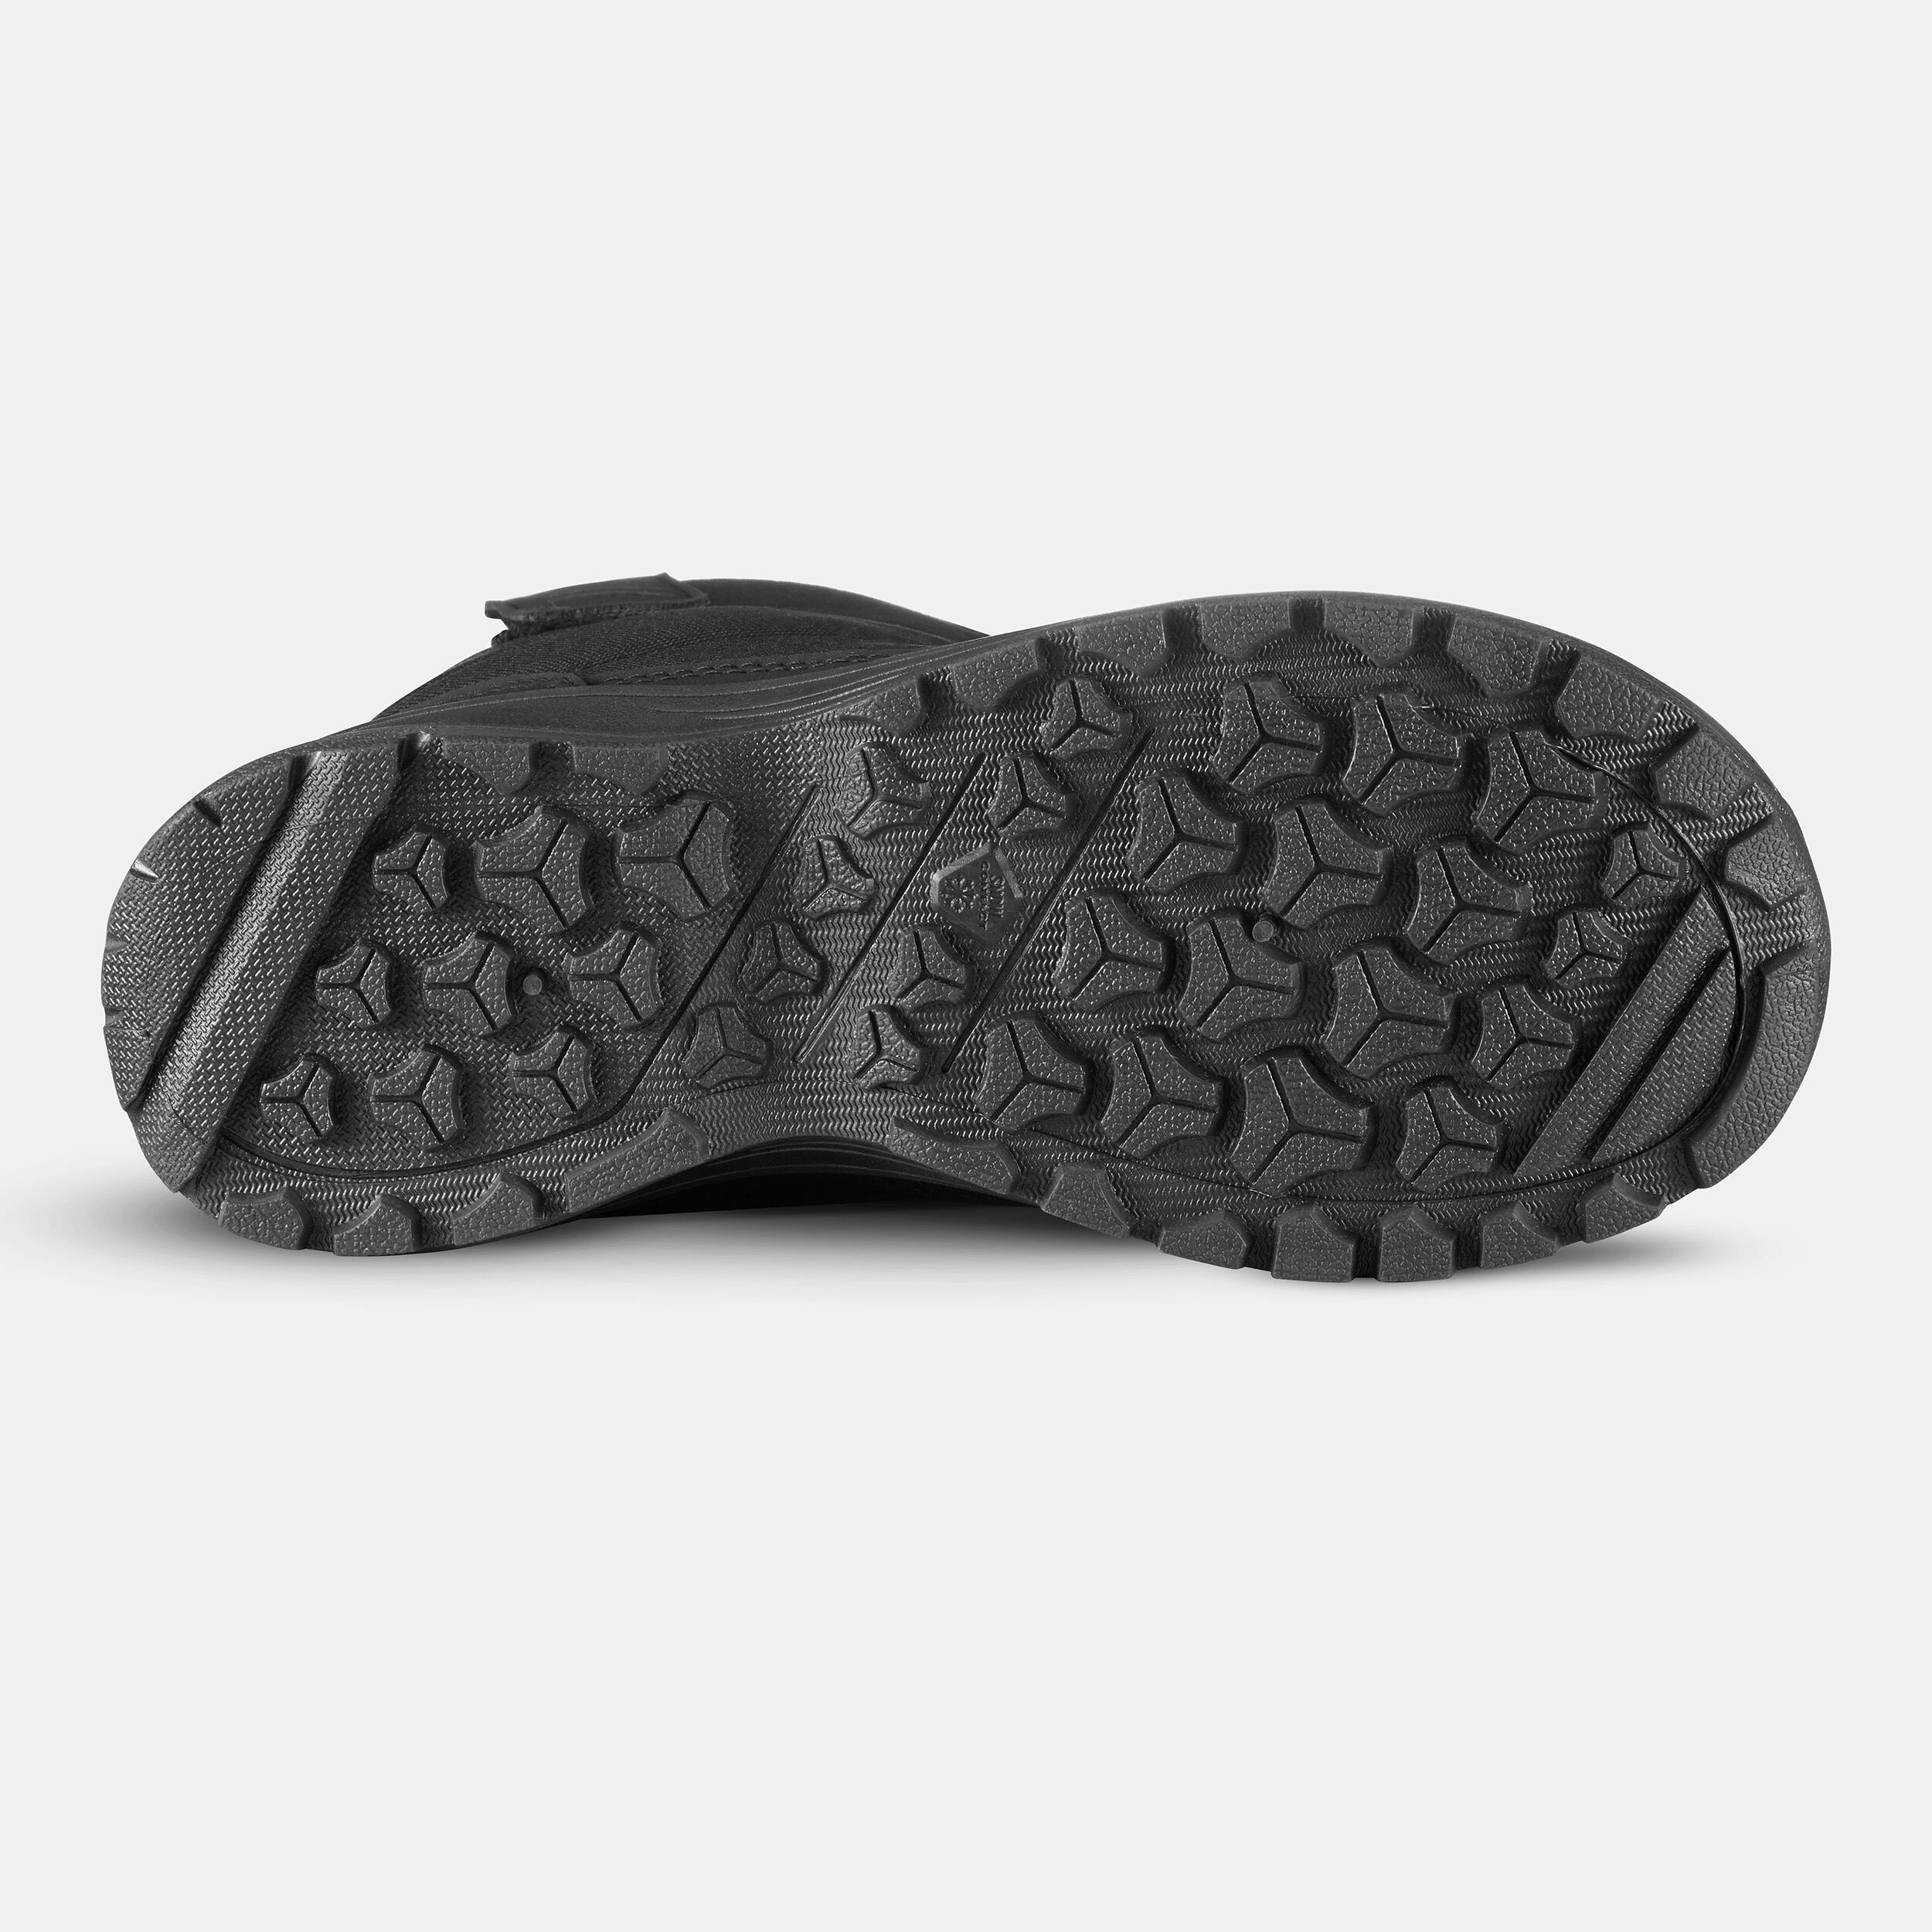 Kids’ warm waterproof snow hiking boots SH100 - Velcro Size 7 - 5.5  4/7